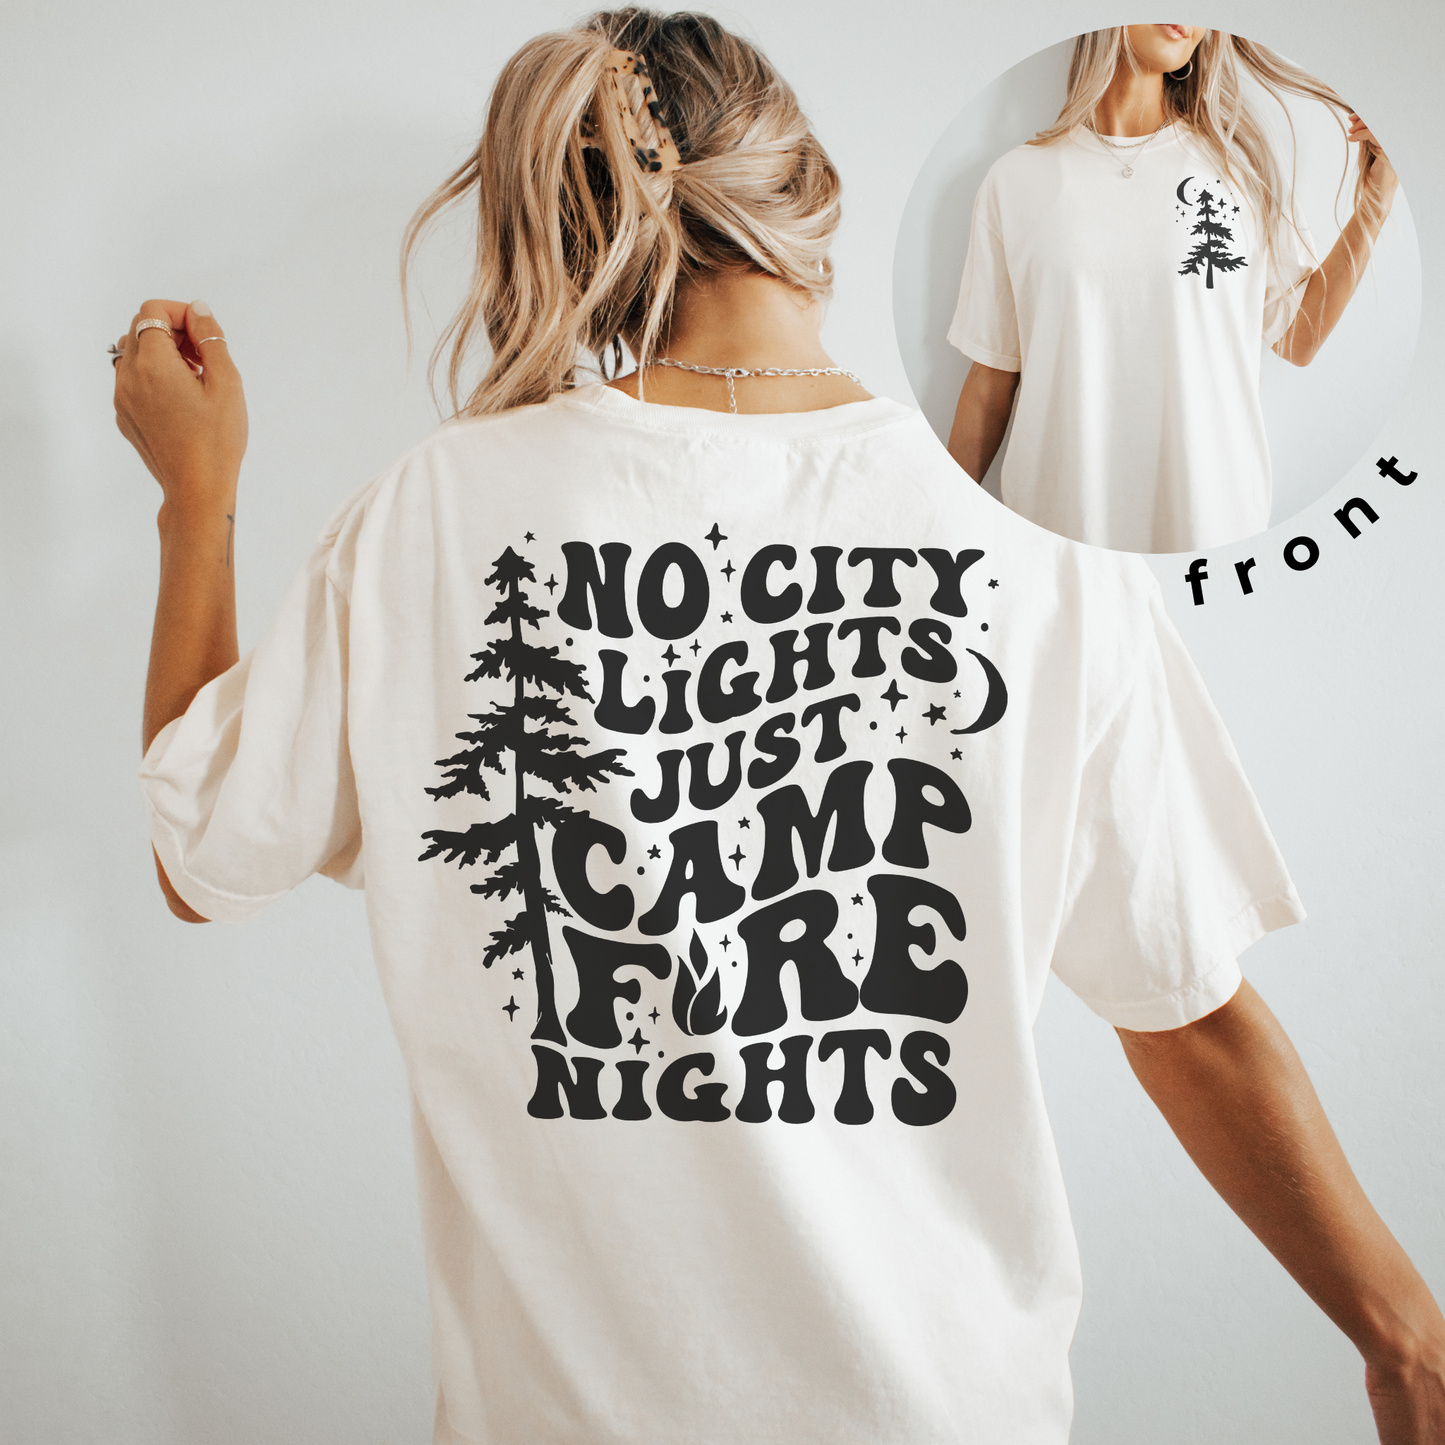 Just Campfire Nights Unisex Garment-Dyed T-shirt